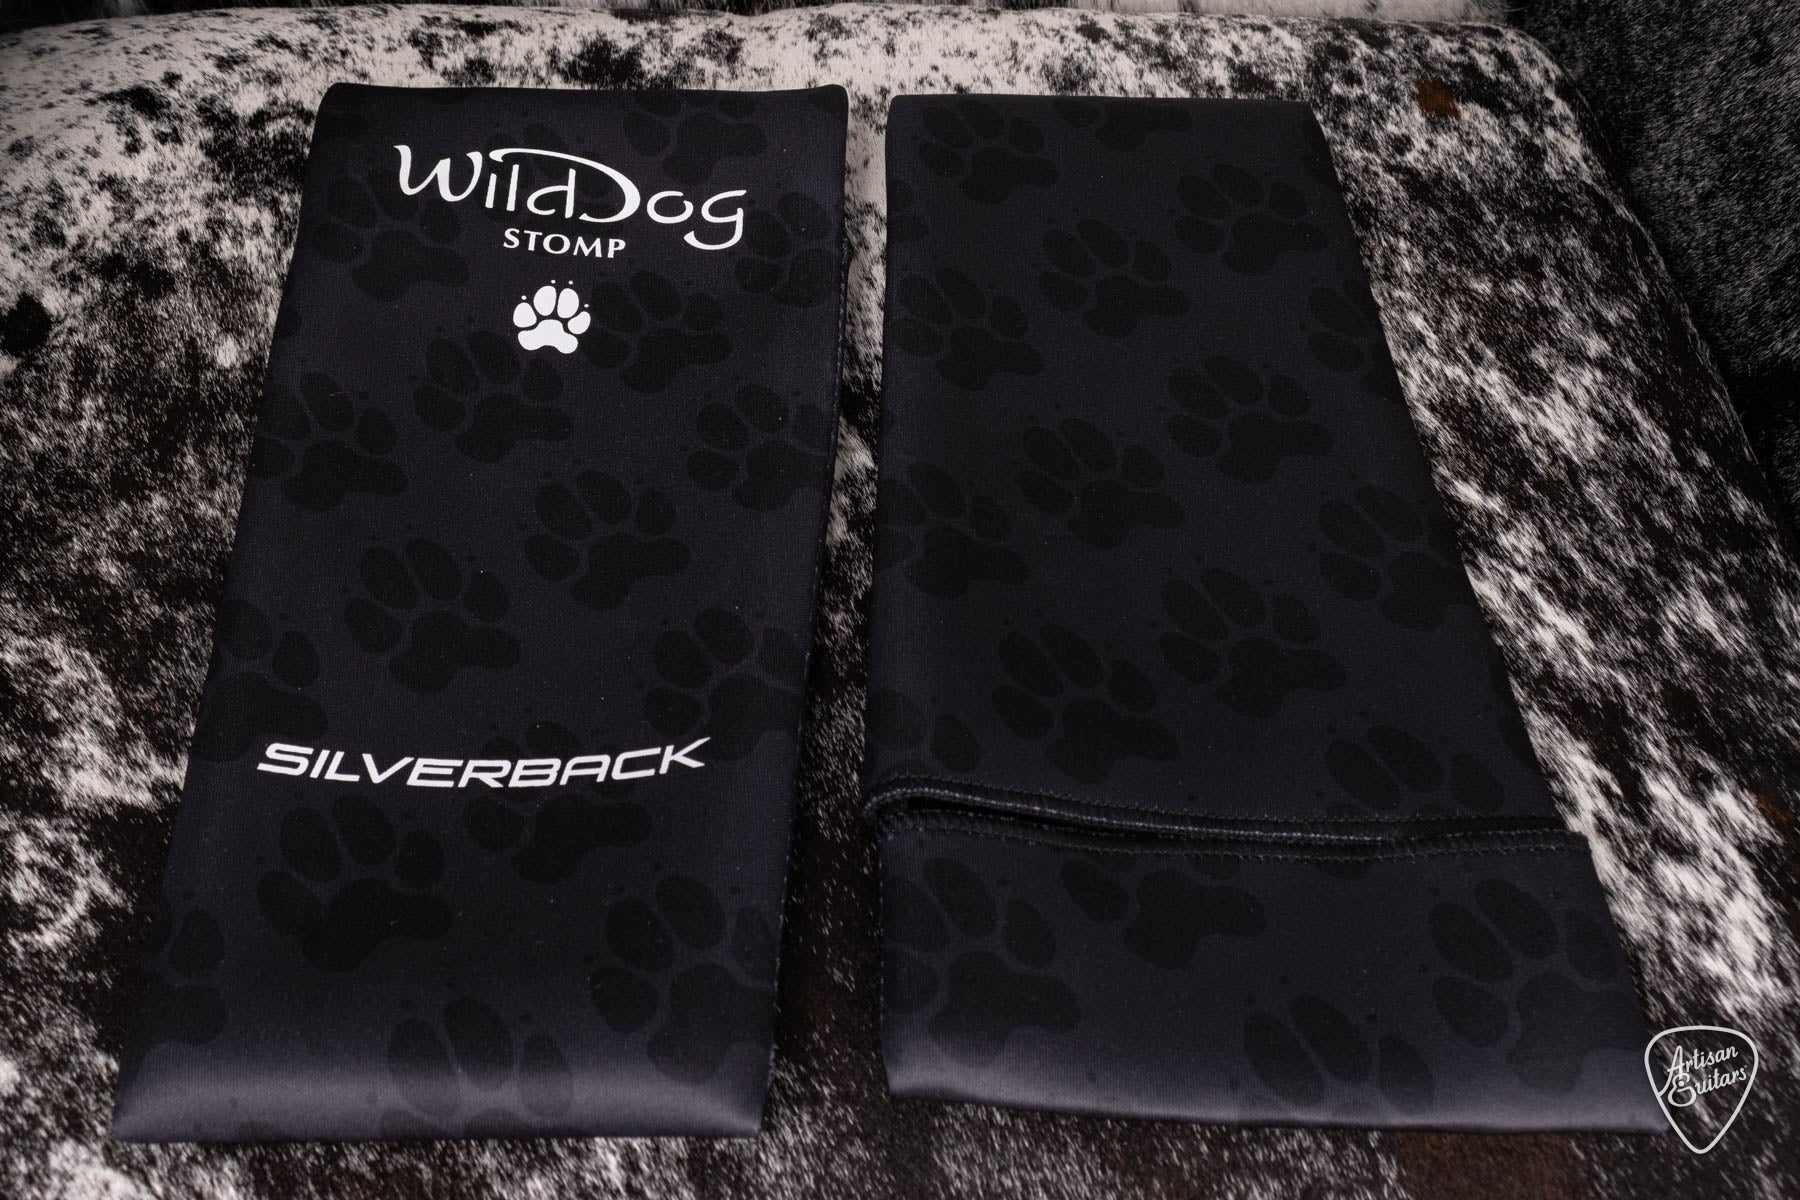 Wild Dog Silverback Stomp Box with Jingles - WD-450823